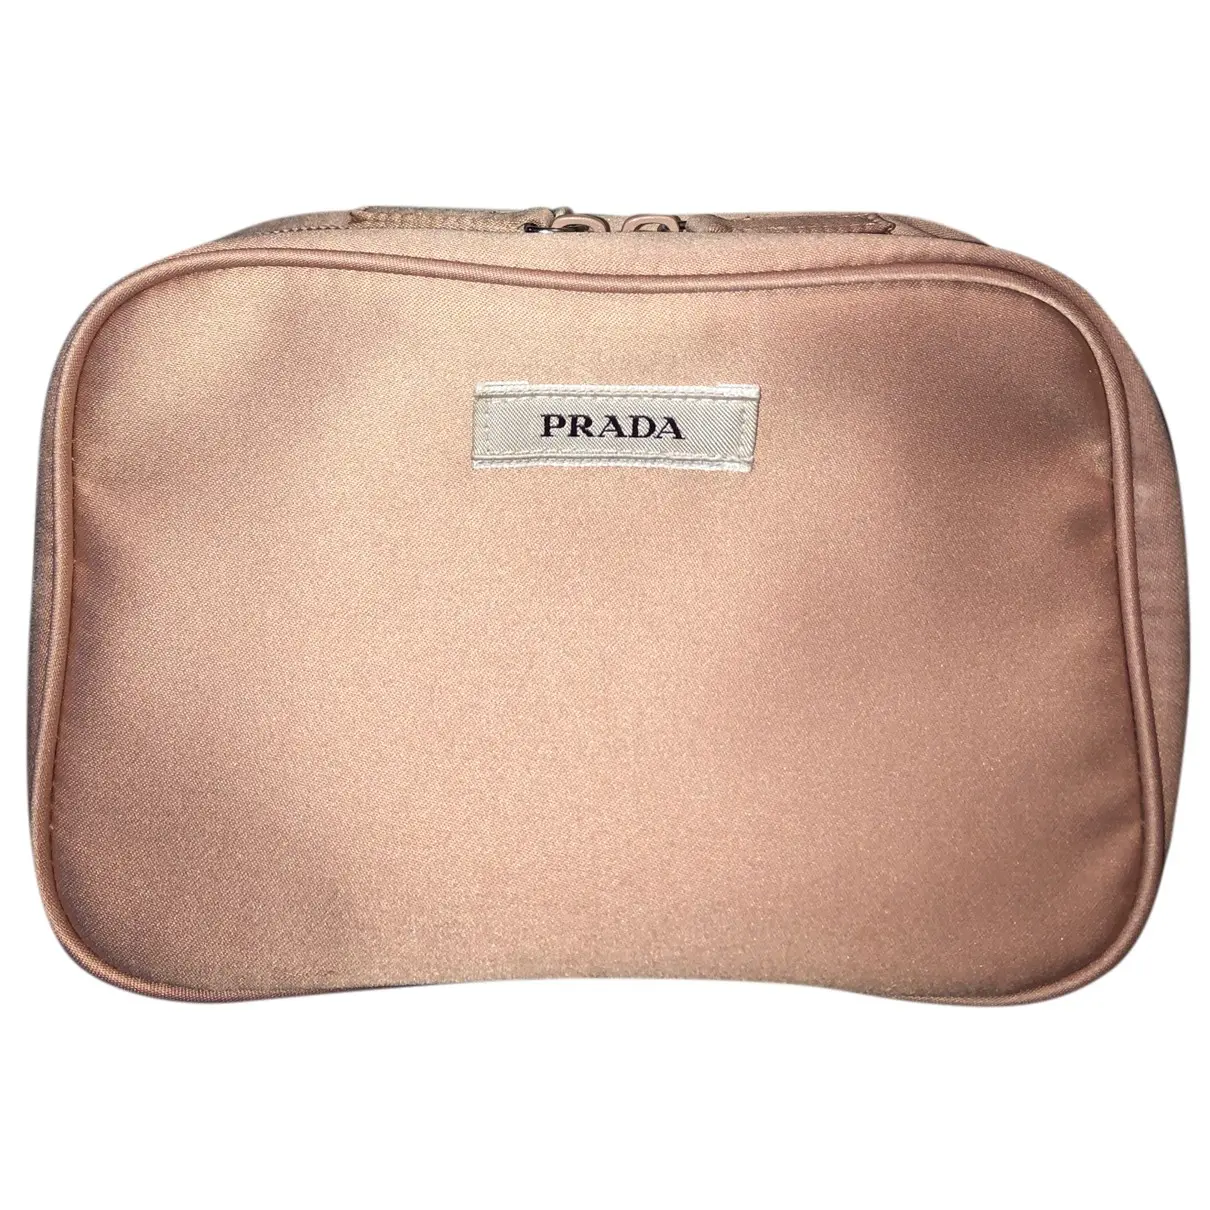 Travel bag Prada